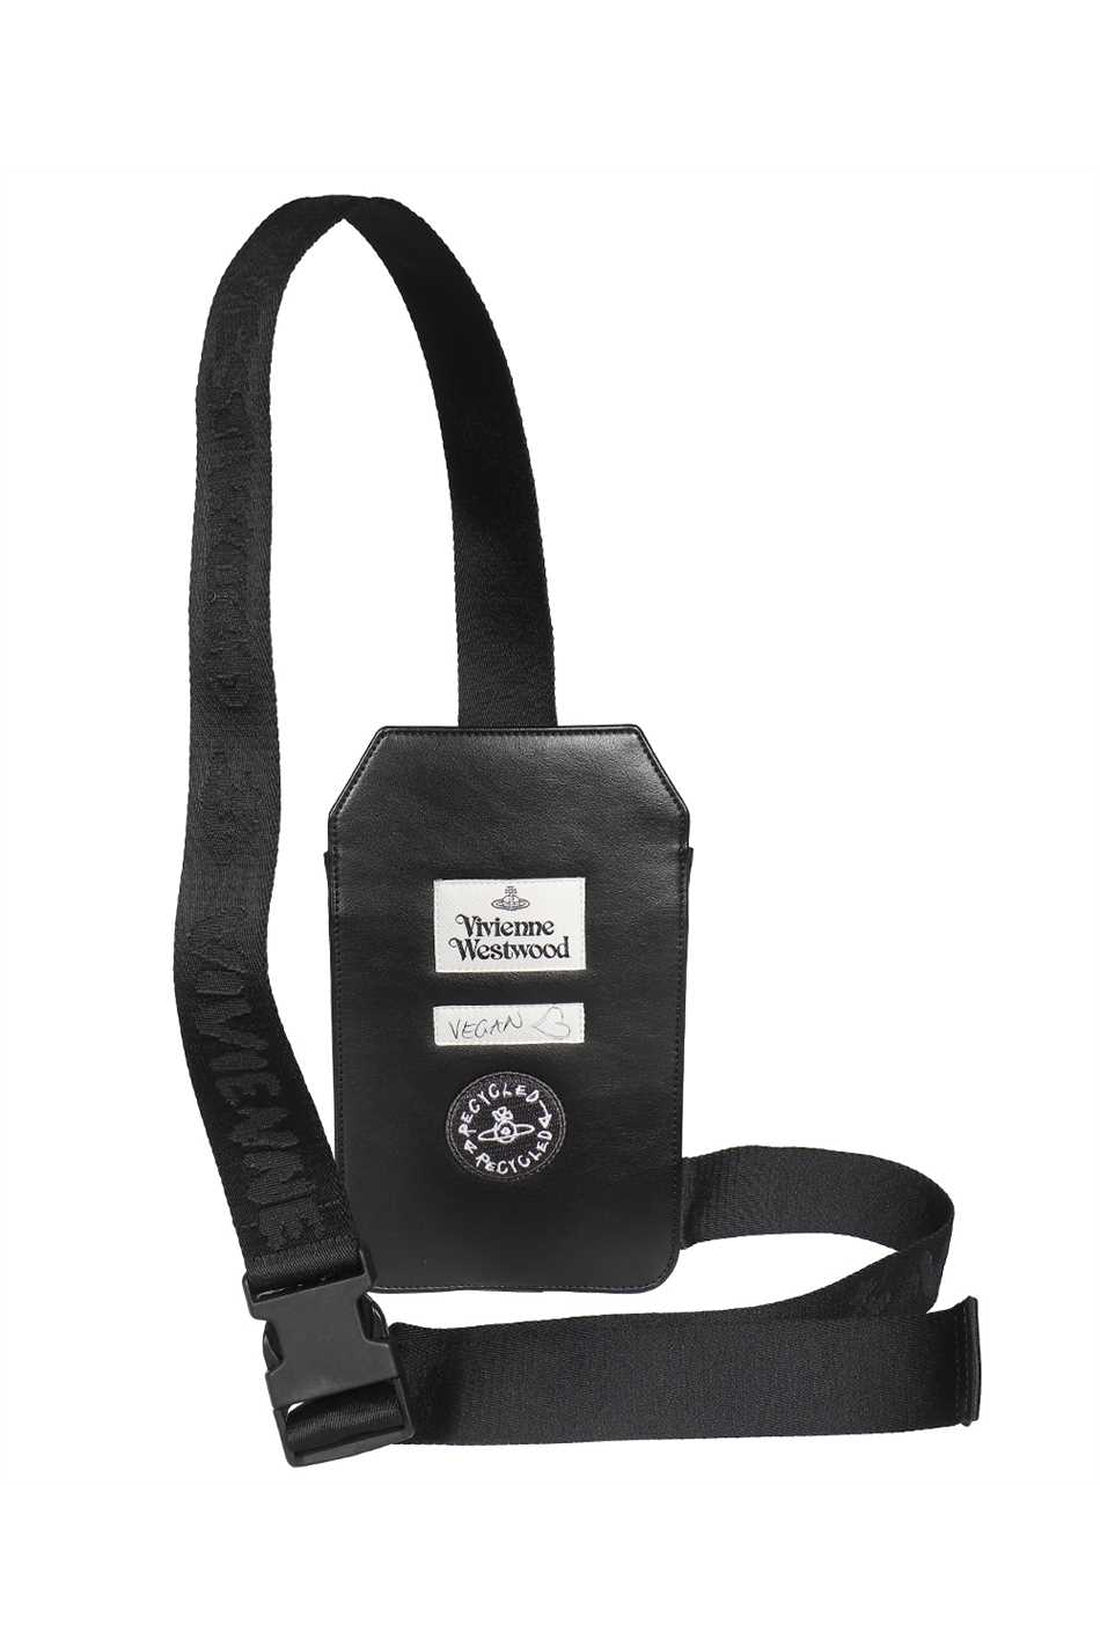 Vivienne Westwood-OUTLET-SALE-Messenger bag with logo-ARCHIVIST